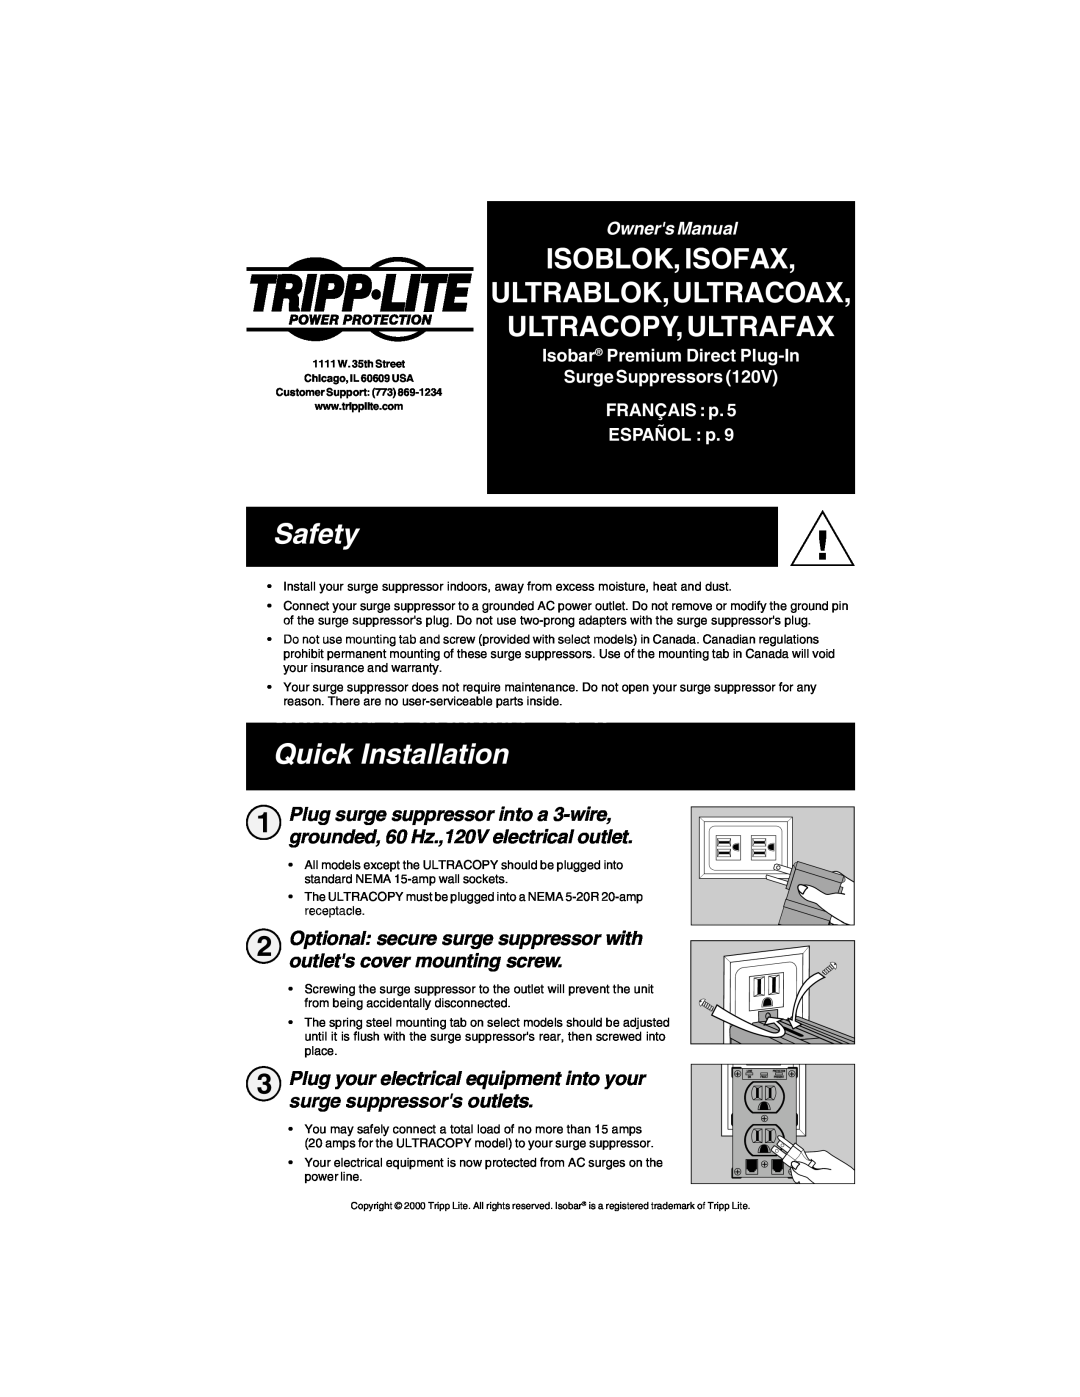 Tripp Lite ULTRAFAX owner manual Isoblok, Isofax, Ultrablok,Ultracoax, Safety, Quick Installation, Ultracopy, Ultrafax 